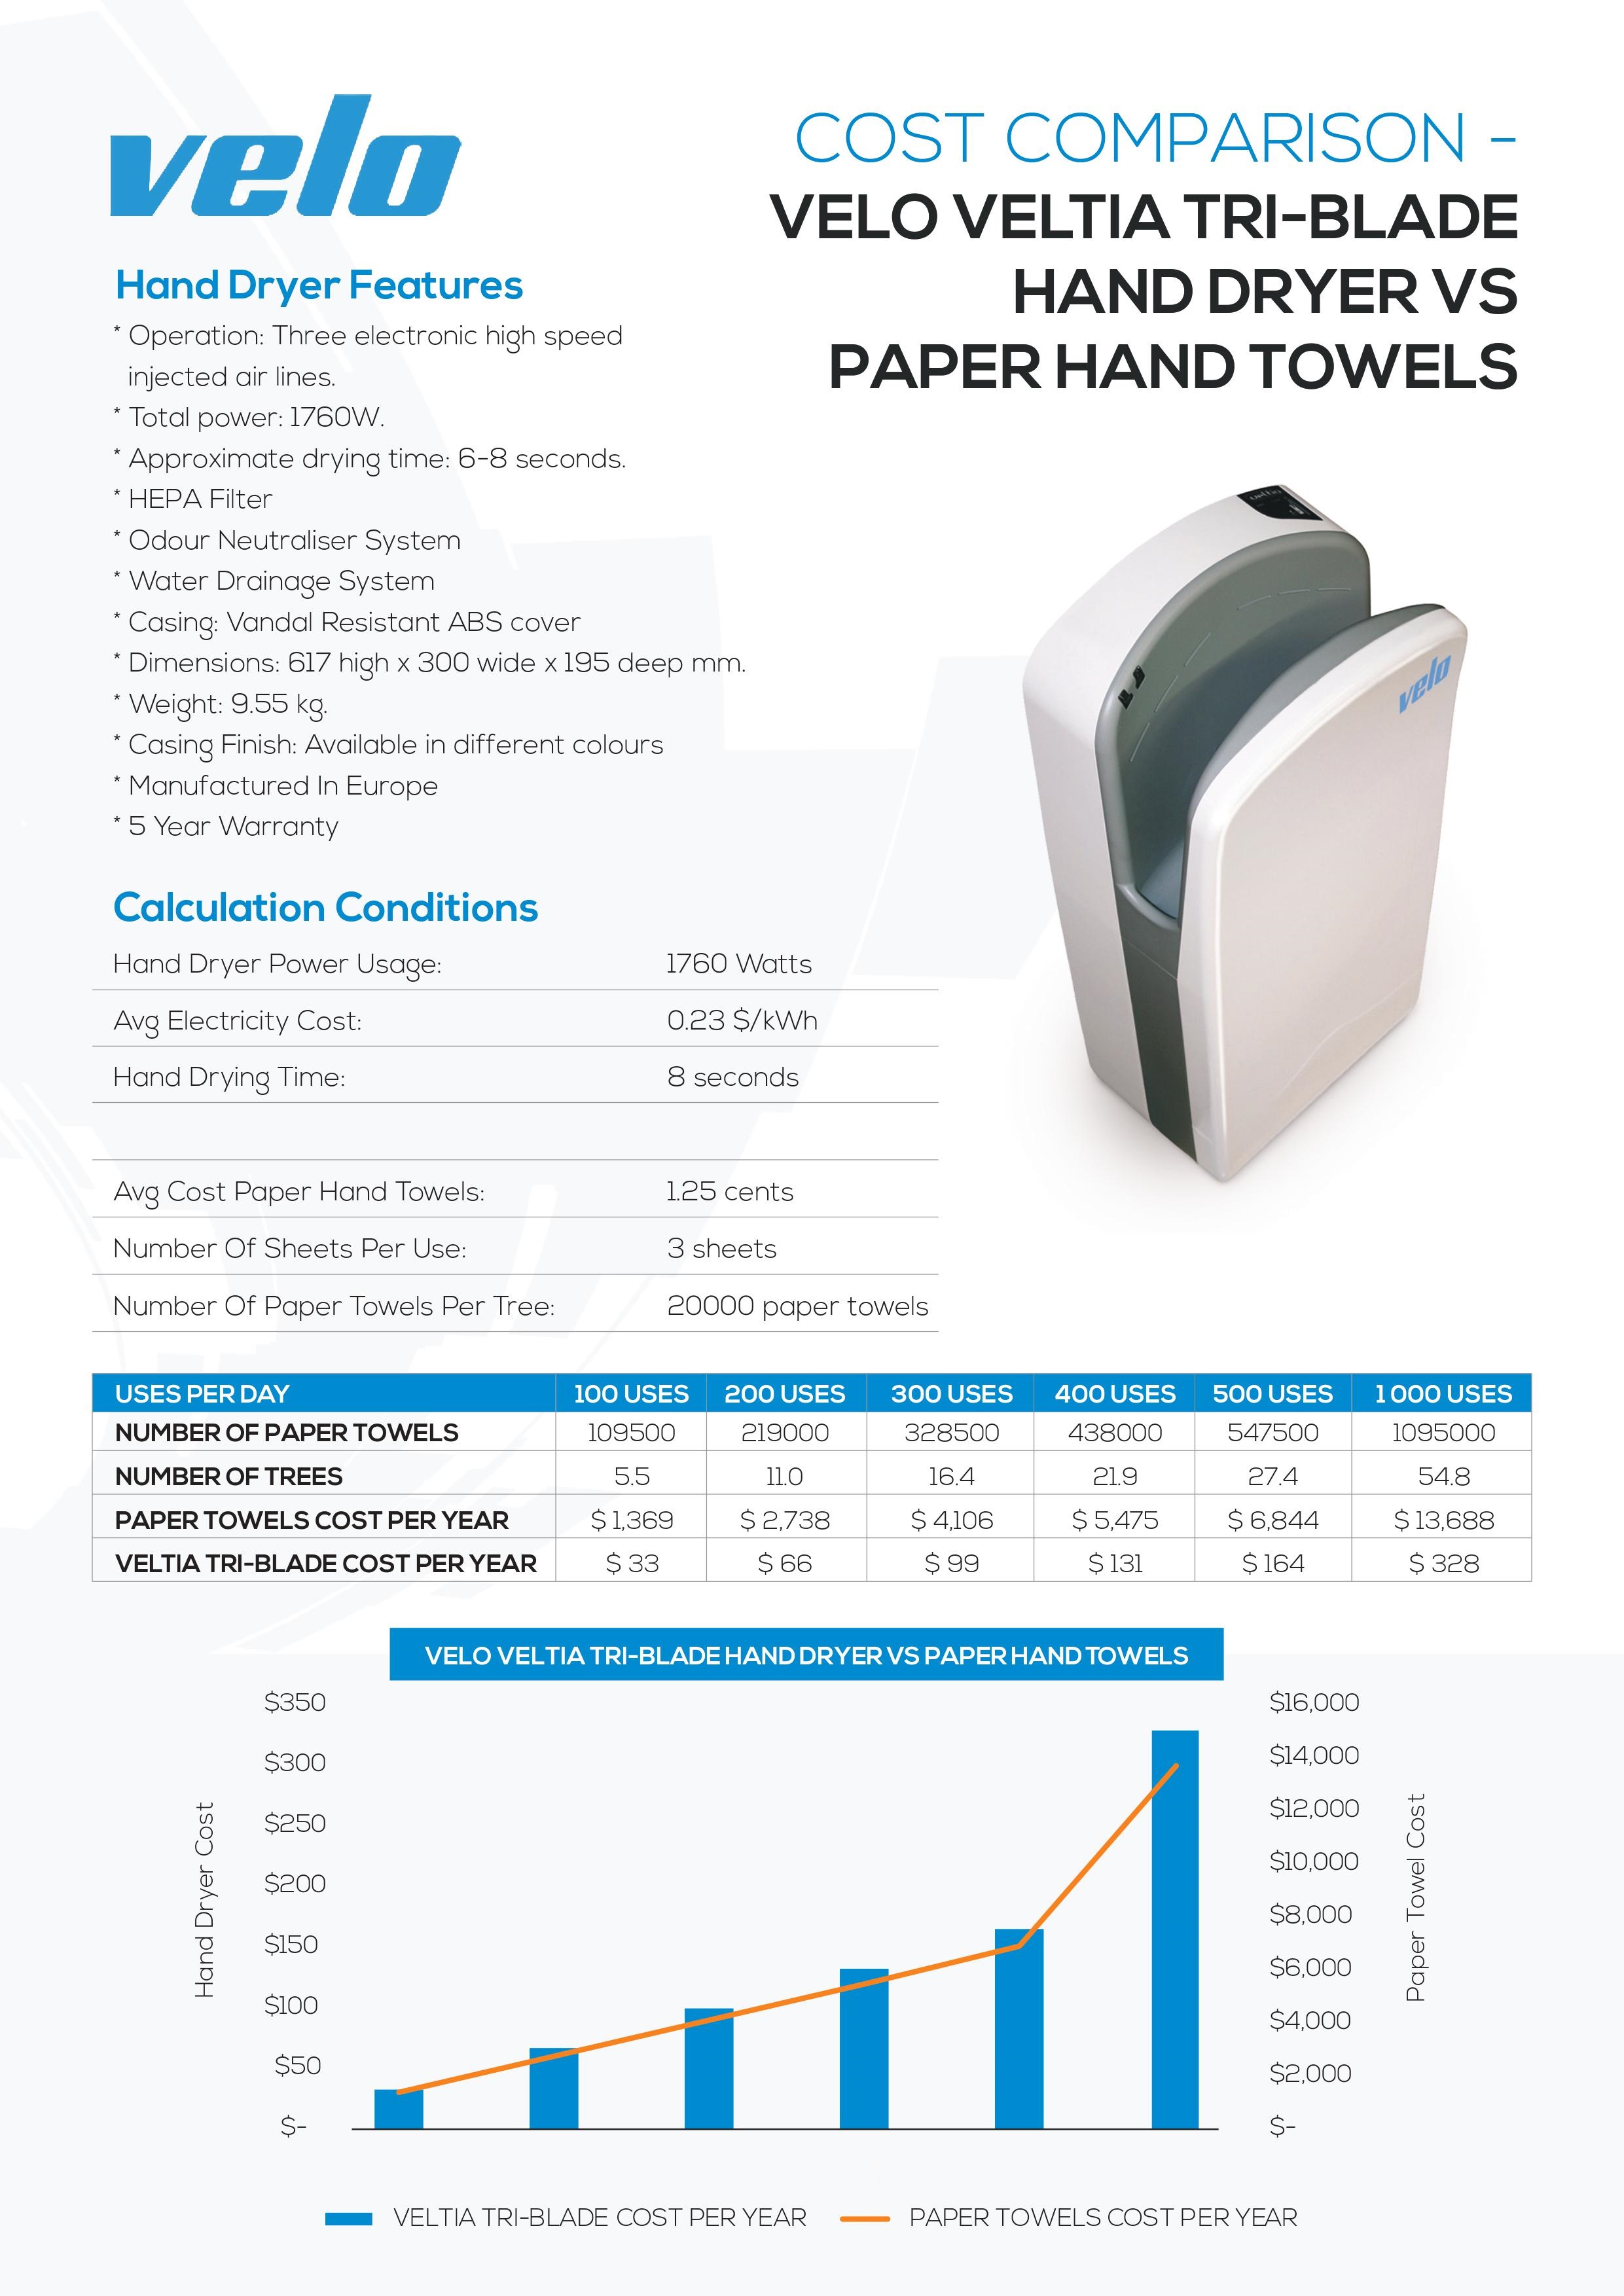 velo veltia tri-blade hand dryer vs paper hand towels cost comparison